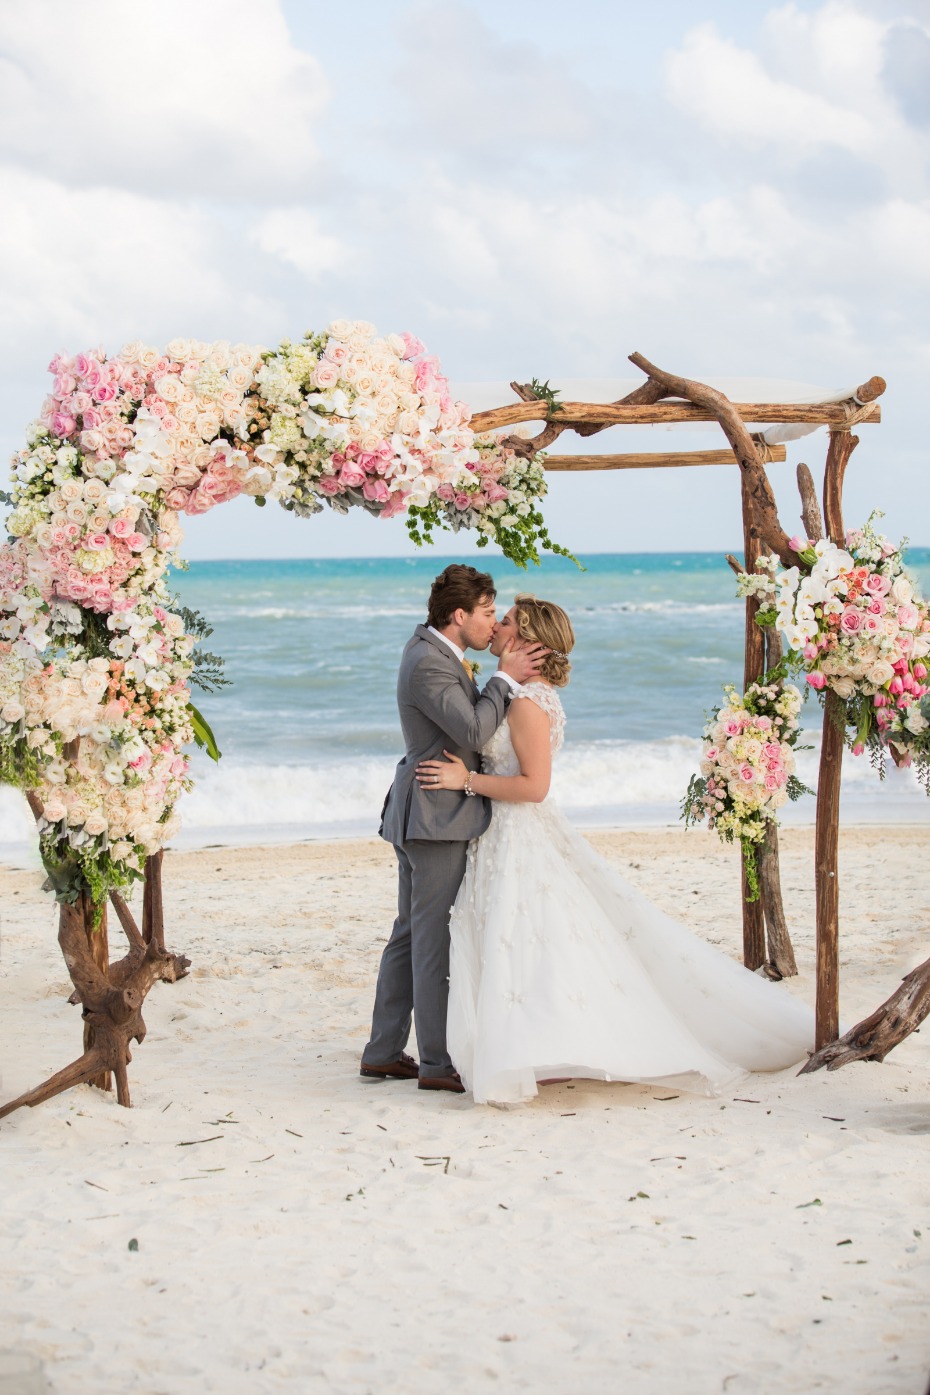 Colorful beach wedding